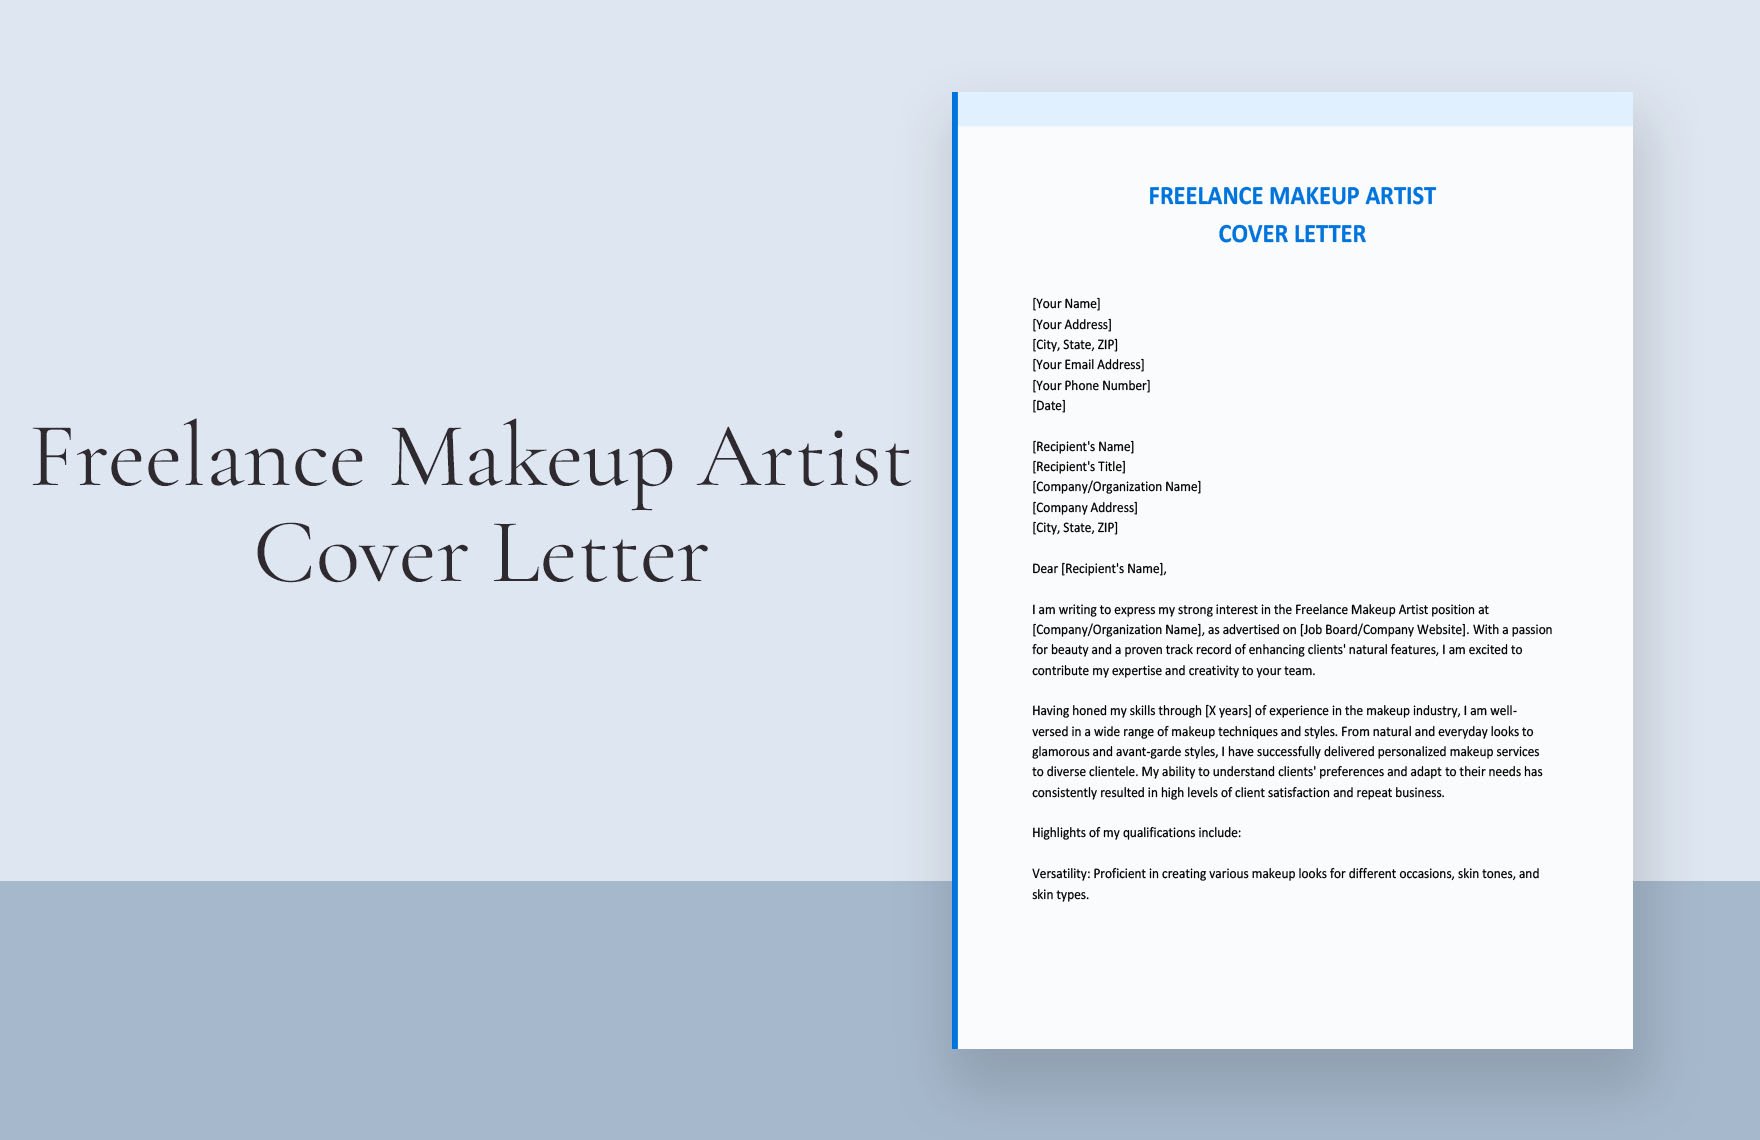 Freelance Makeup Artist Cover Letter in Word, Google Docs